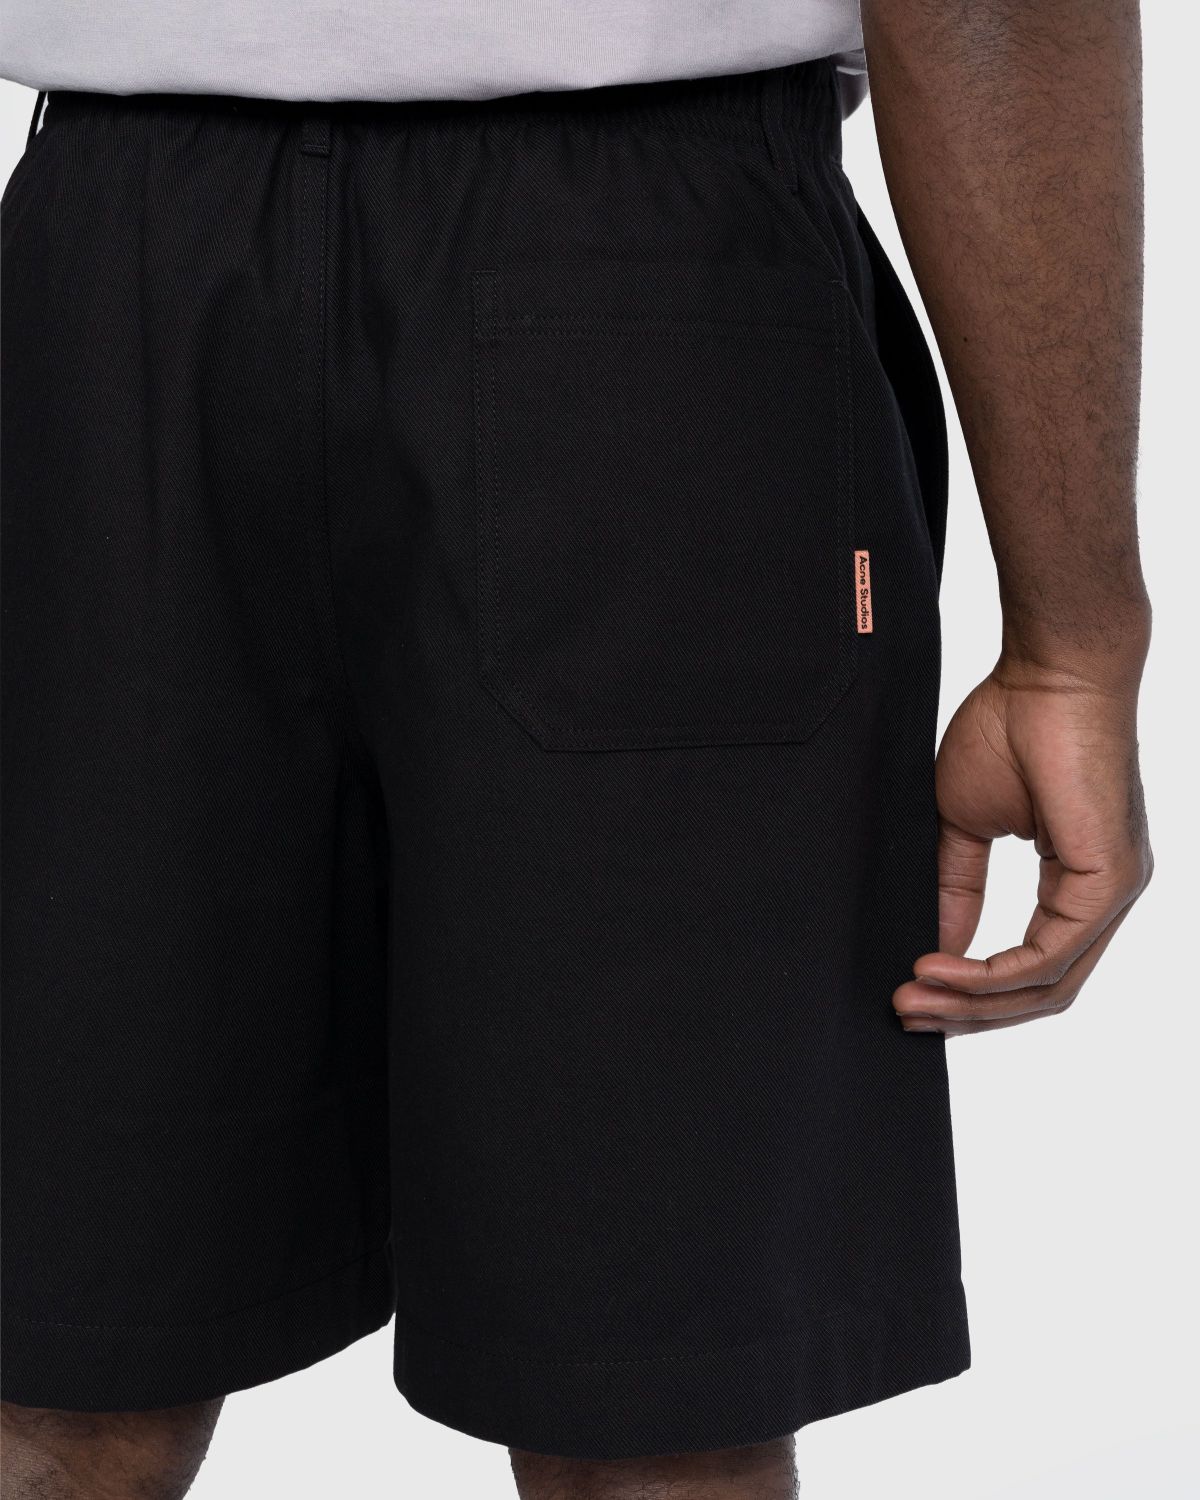 Acne Studios – Regular Fit Shorts Black - Shorts - Black - Image 6